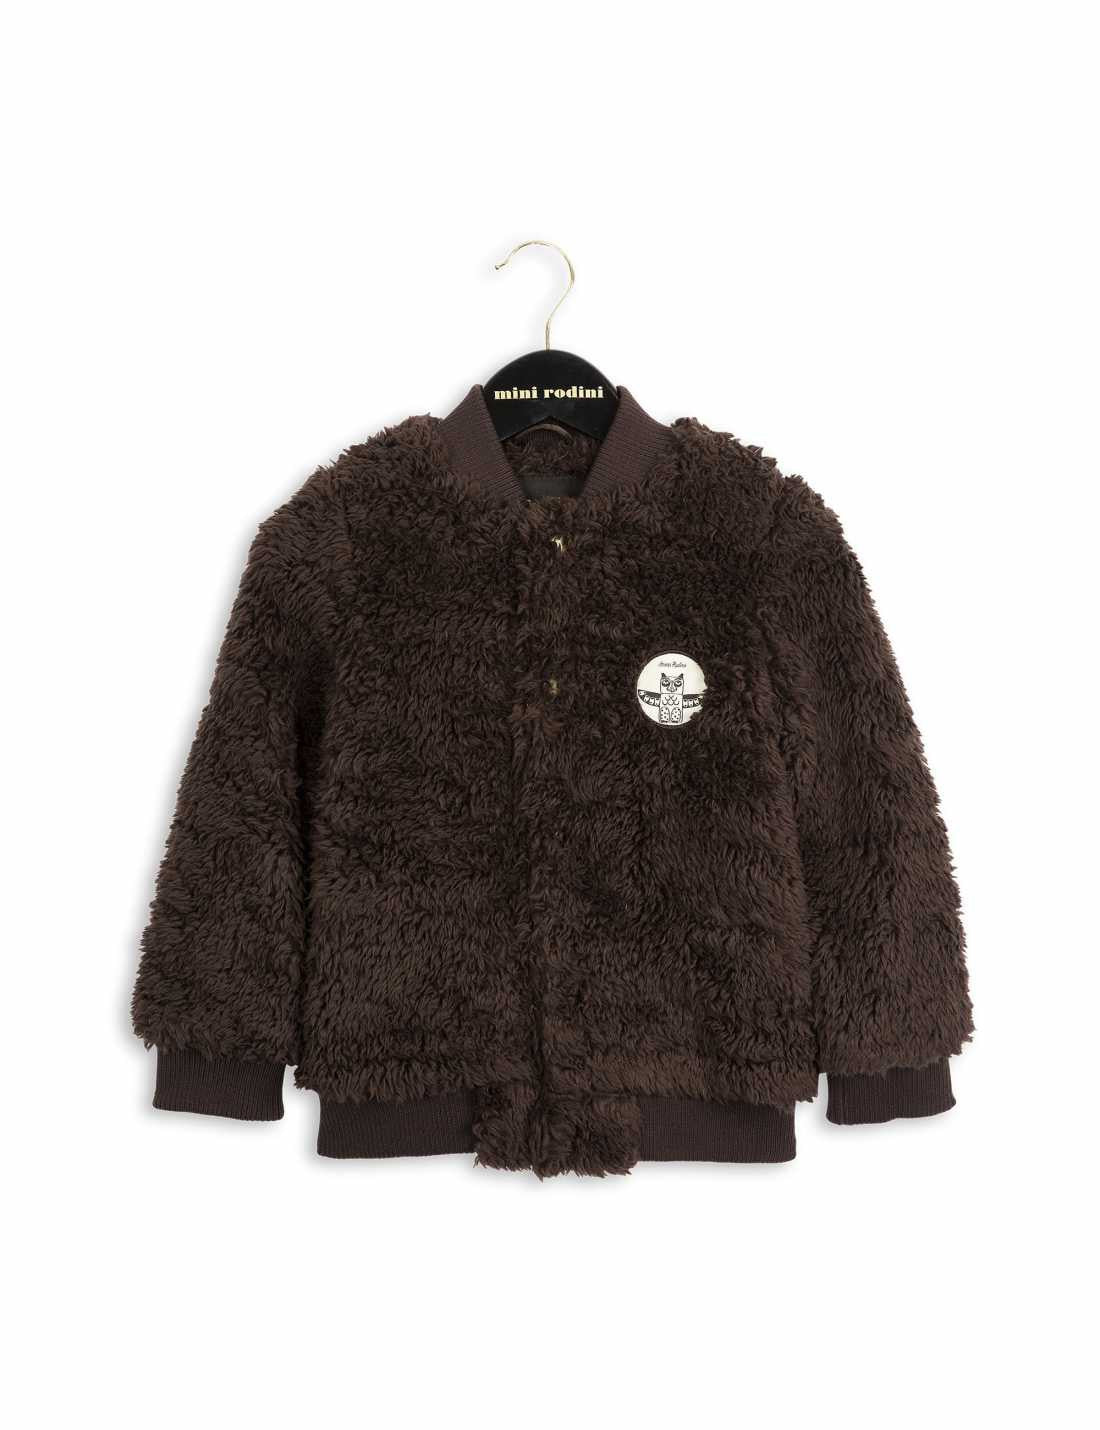 Girls Dark Brown Fur Ribbed Cuffs Coat - CÉMAROSE | Children's Fashion Store - 1